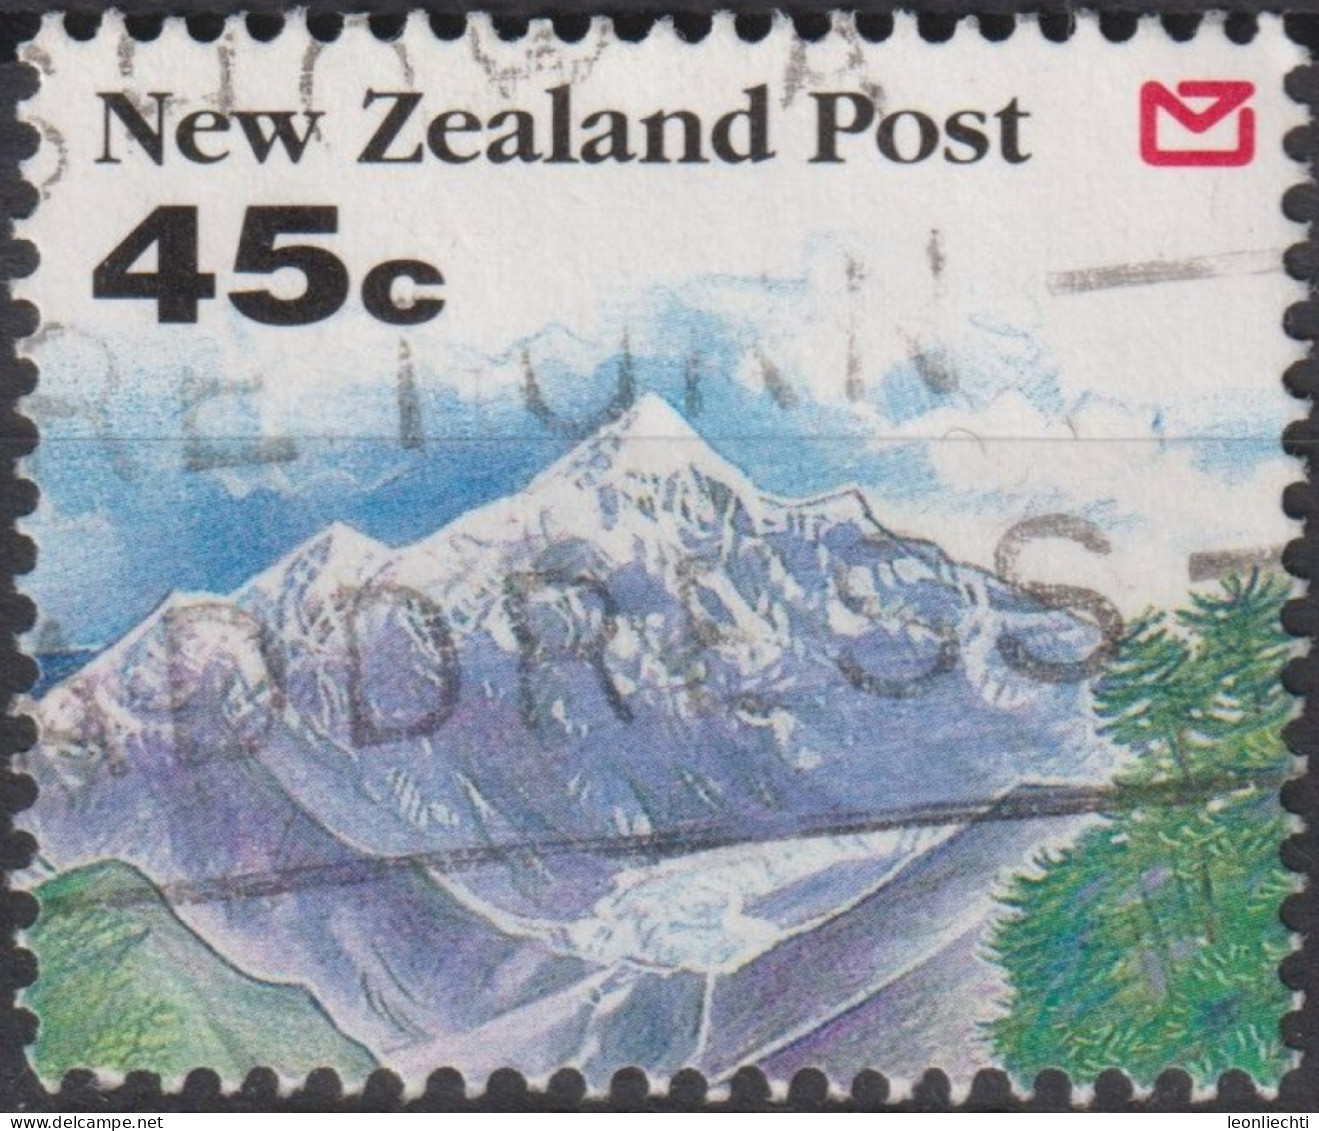 1992 Neuseeland ° Mi:NZ 1247A, Sn:NZ 1119, Yt:NZ 1191, Glacier Ice, Scenery 1992 - Landscapes - Oblitérés